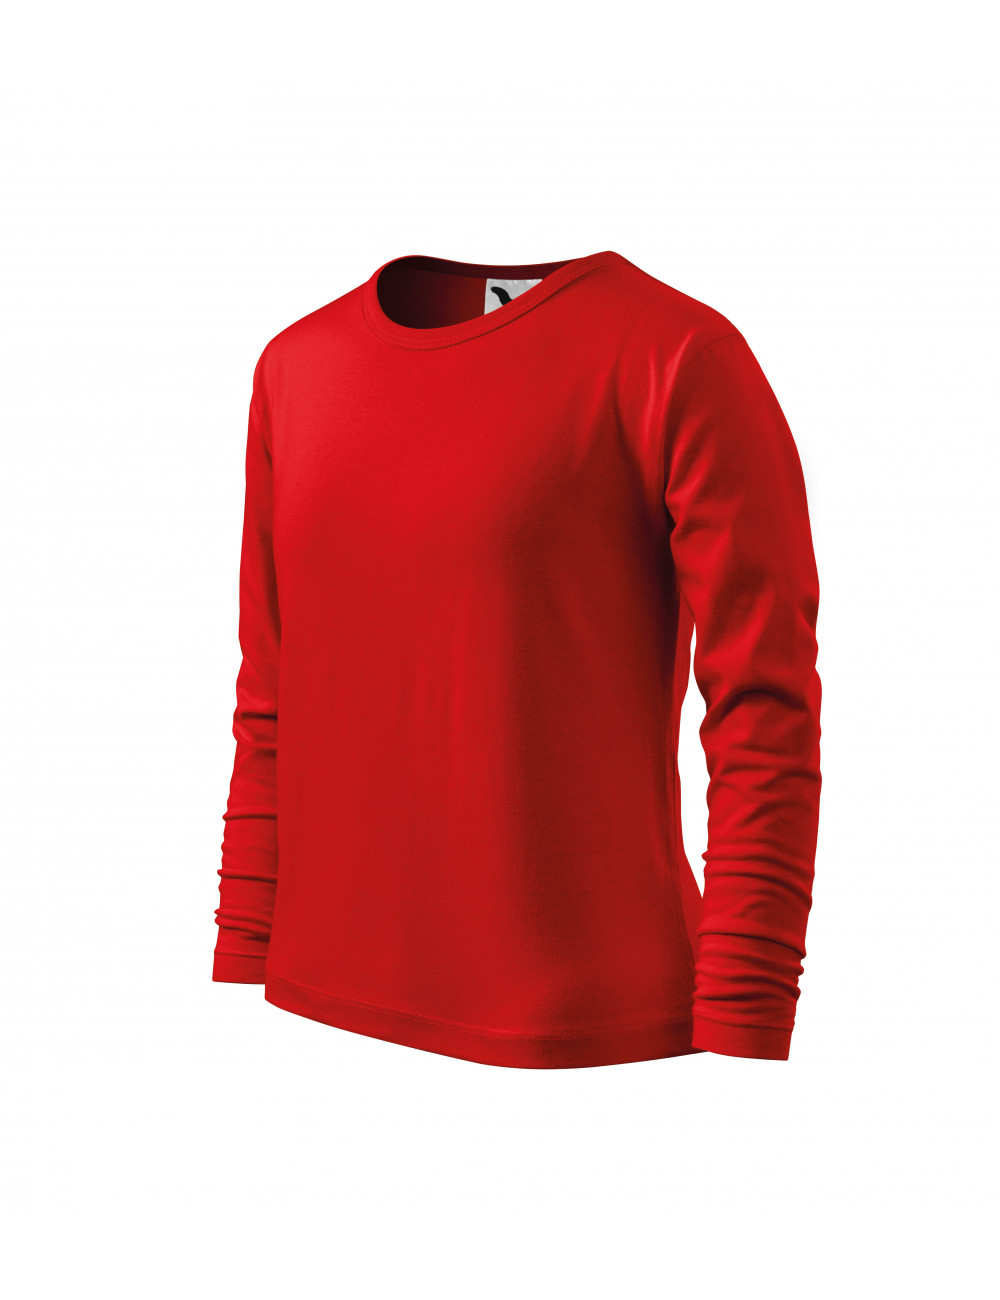 Kinder-Langarm-T-Shirt 121 rot Adler Malfini